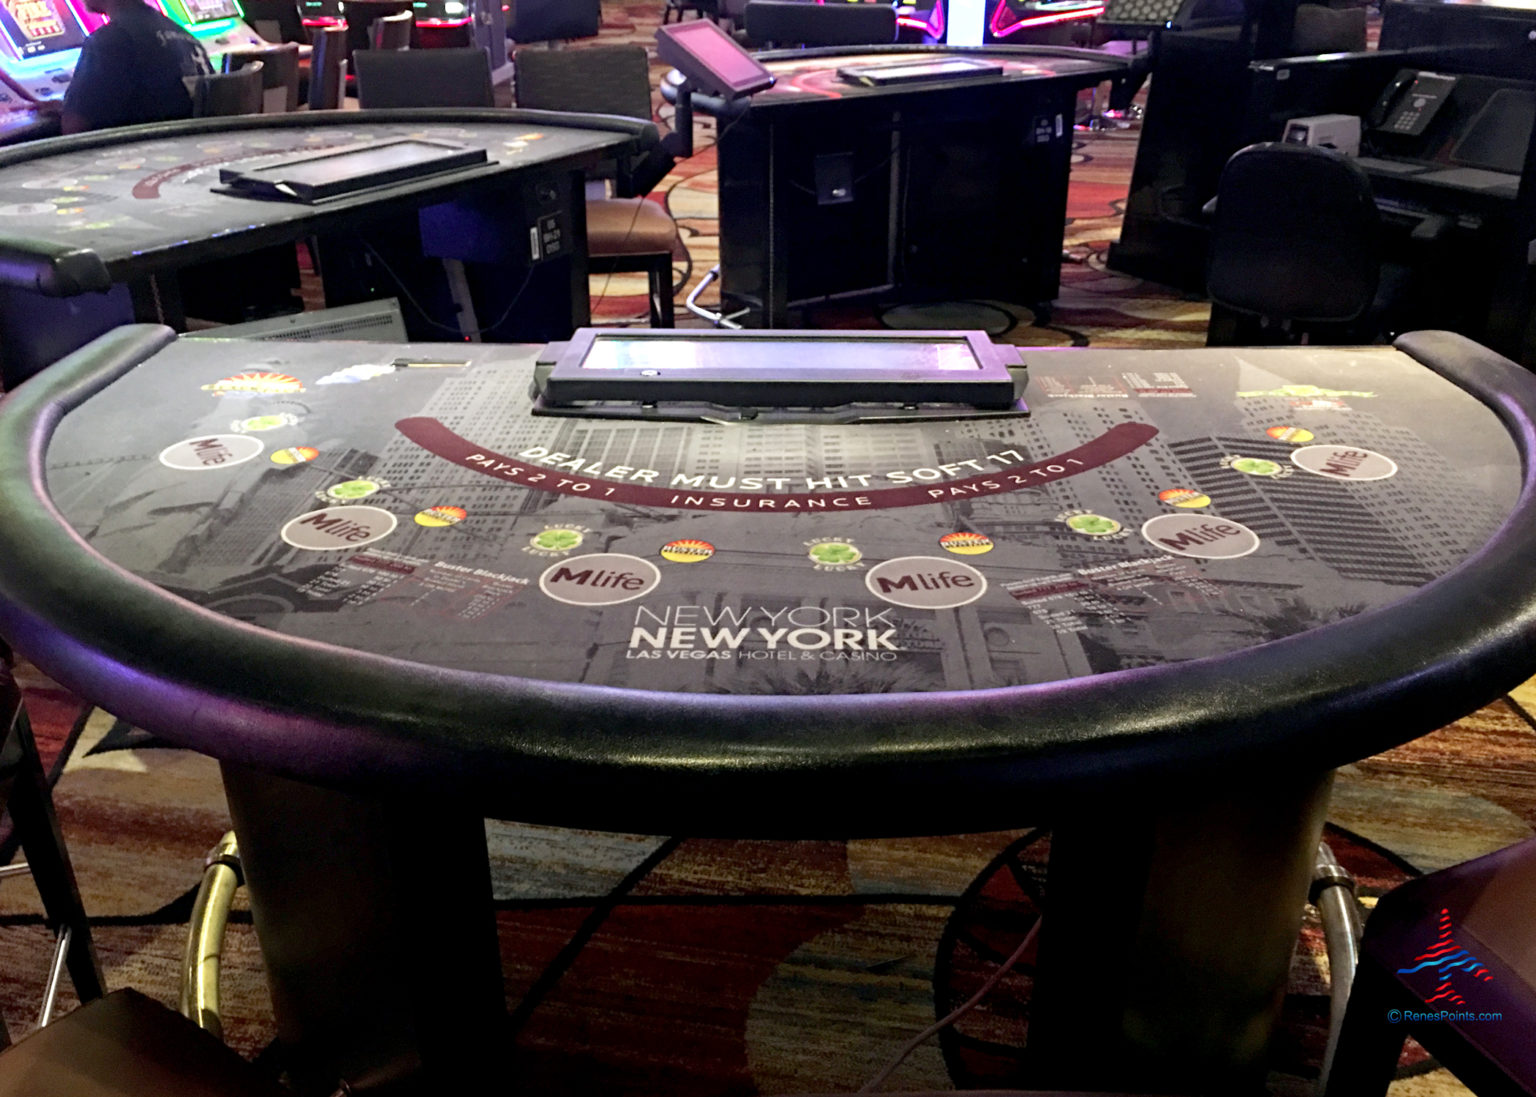 resort world casino blackjack